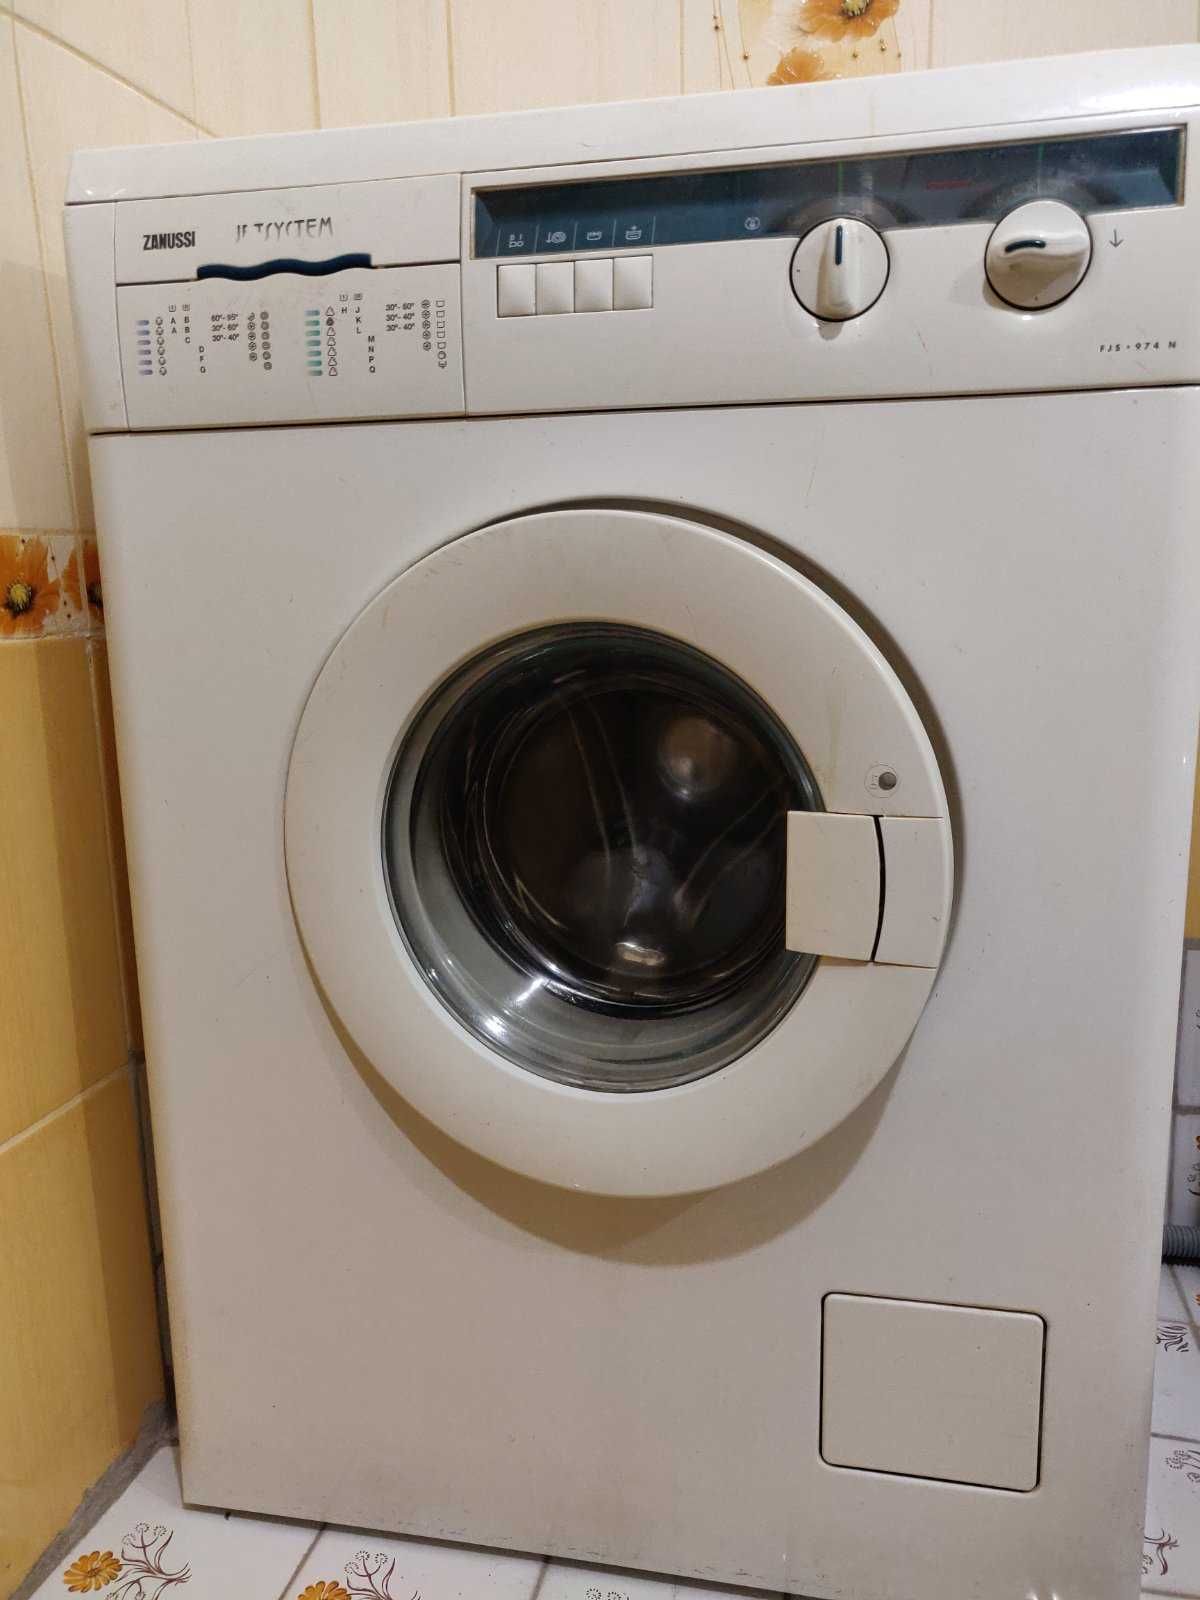 стиральная машина автомат занусси FJS 974 N электролюкс